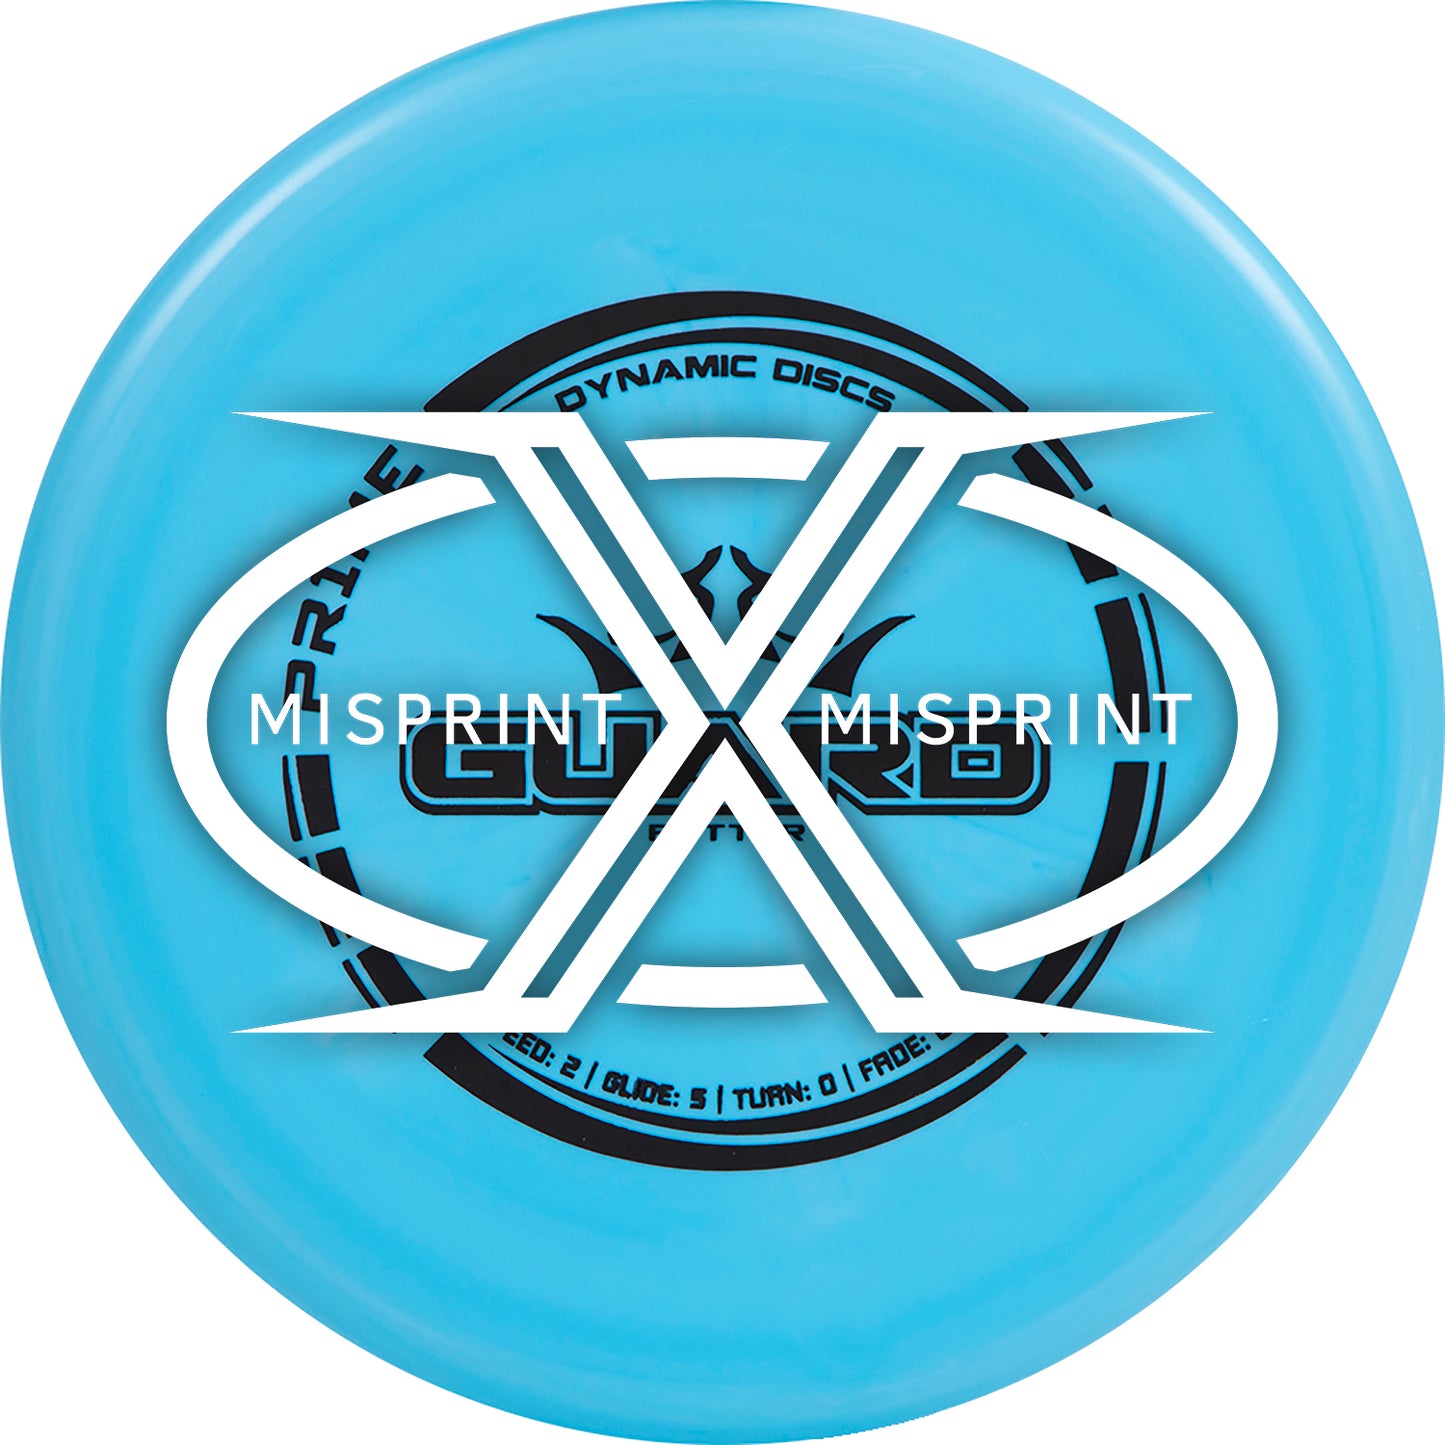 Misprint Dynamic Discs Prime Guard